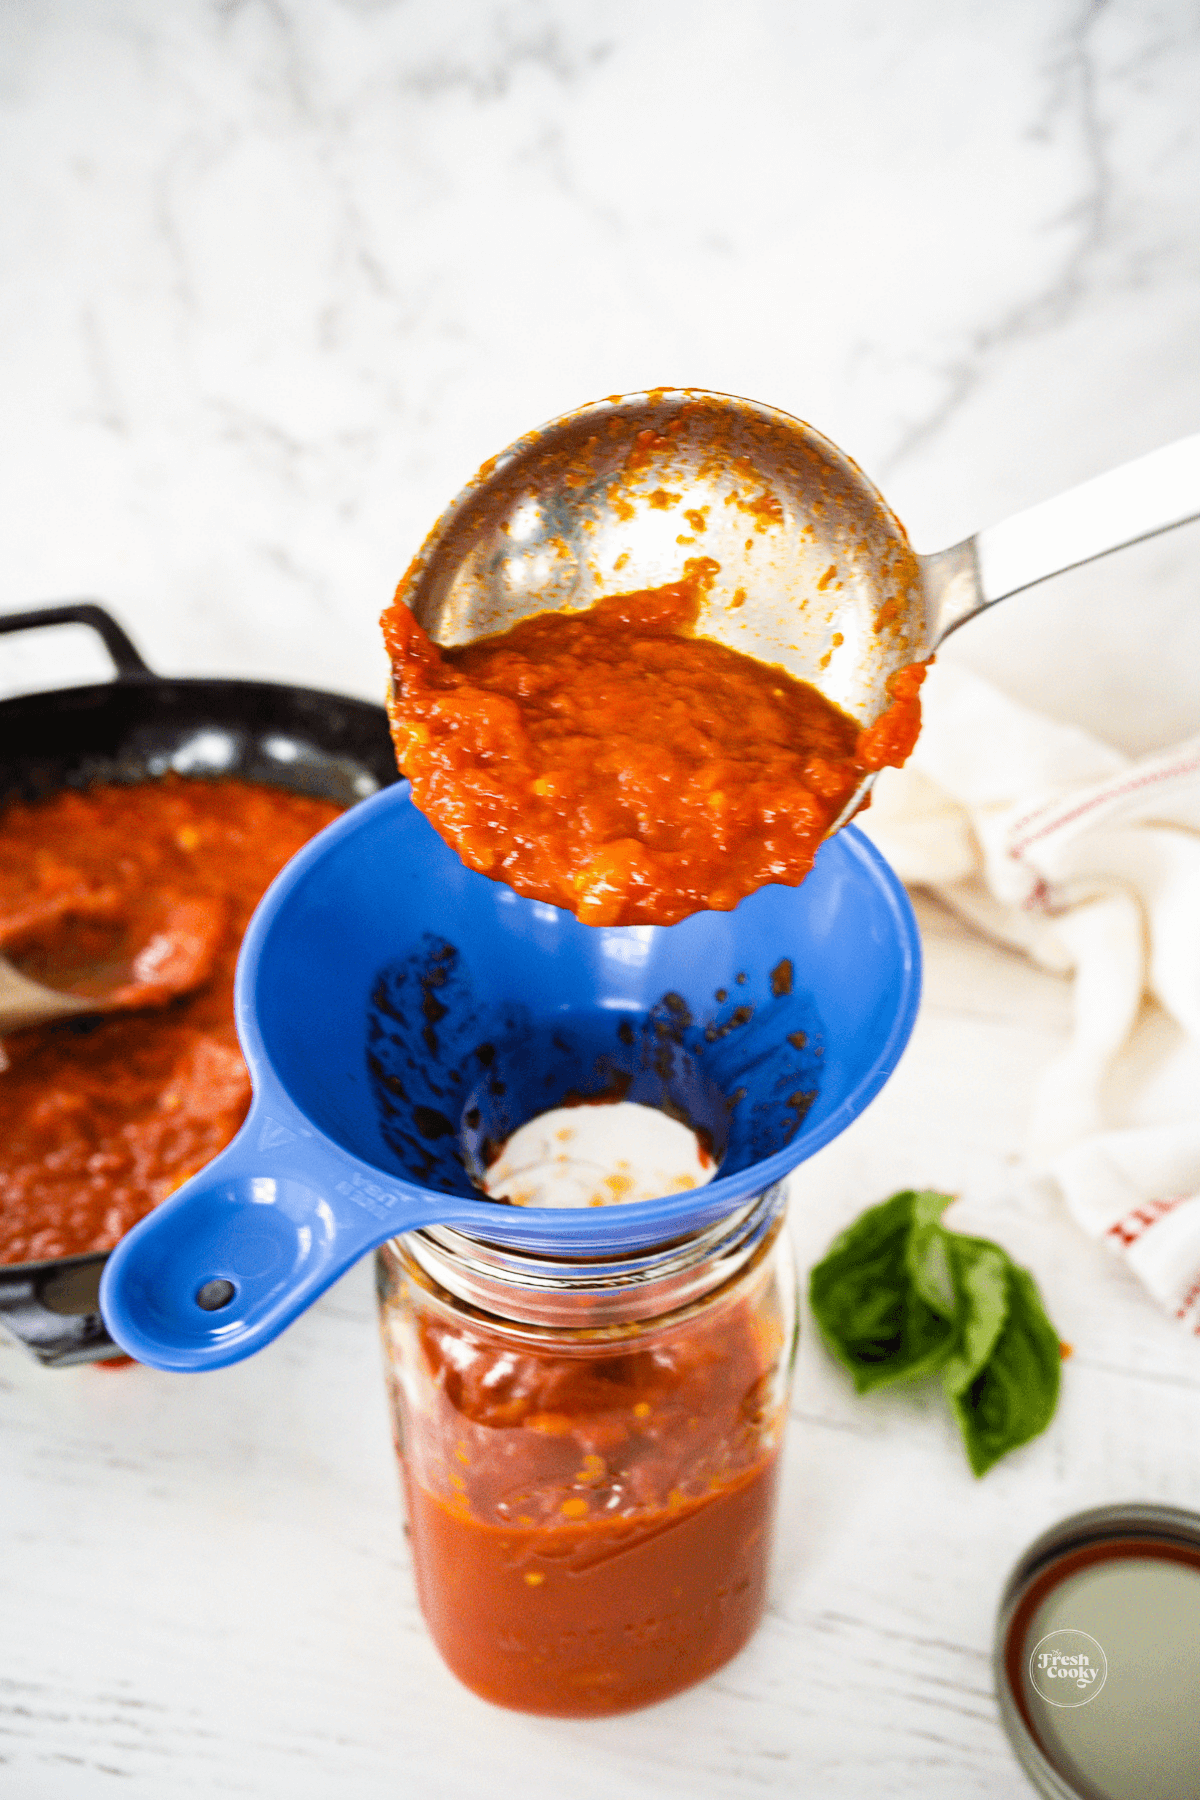 Ladle sauce into jars to store in fridge or freezer.